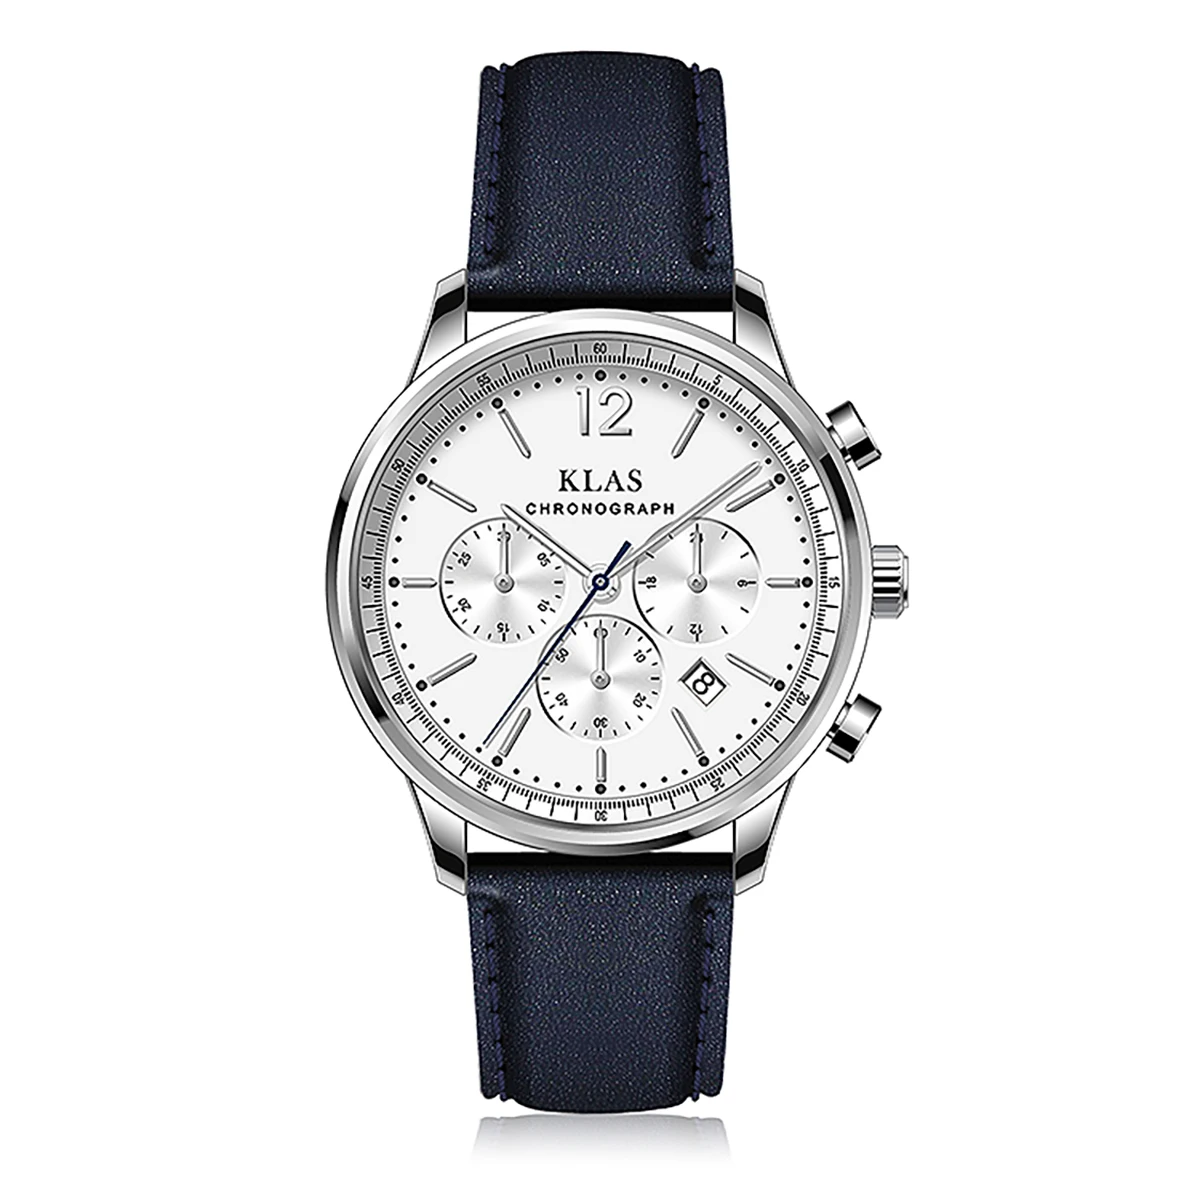 New Men's watches top luxury brand sports quartz timepiece men's timepiece waterproof watch leather 316 stainless  KLAS Brand